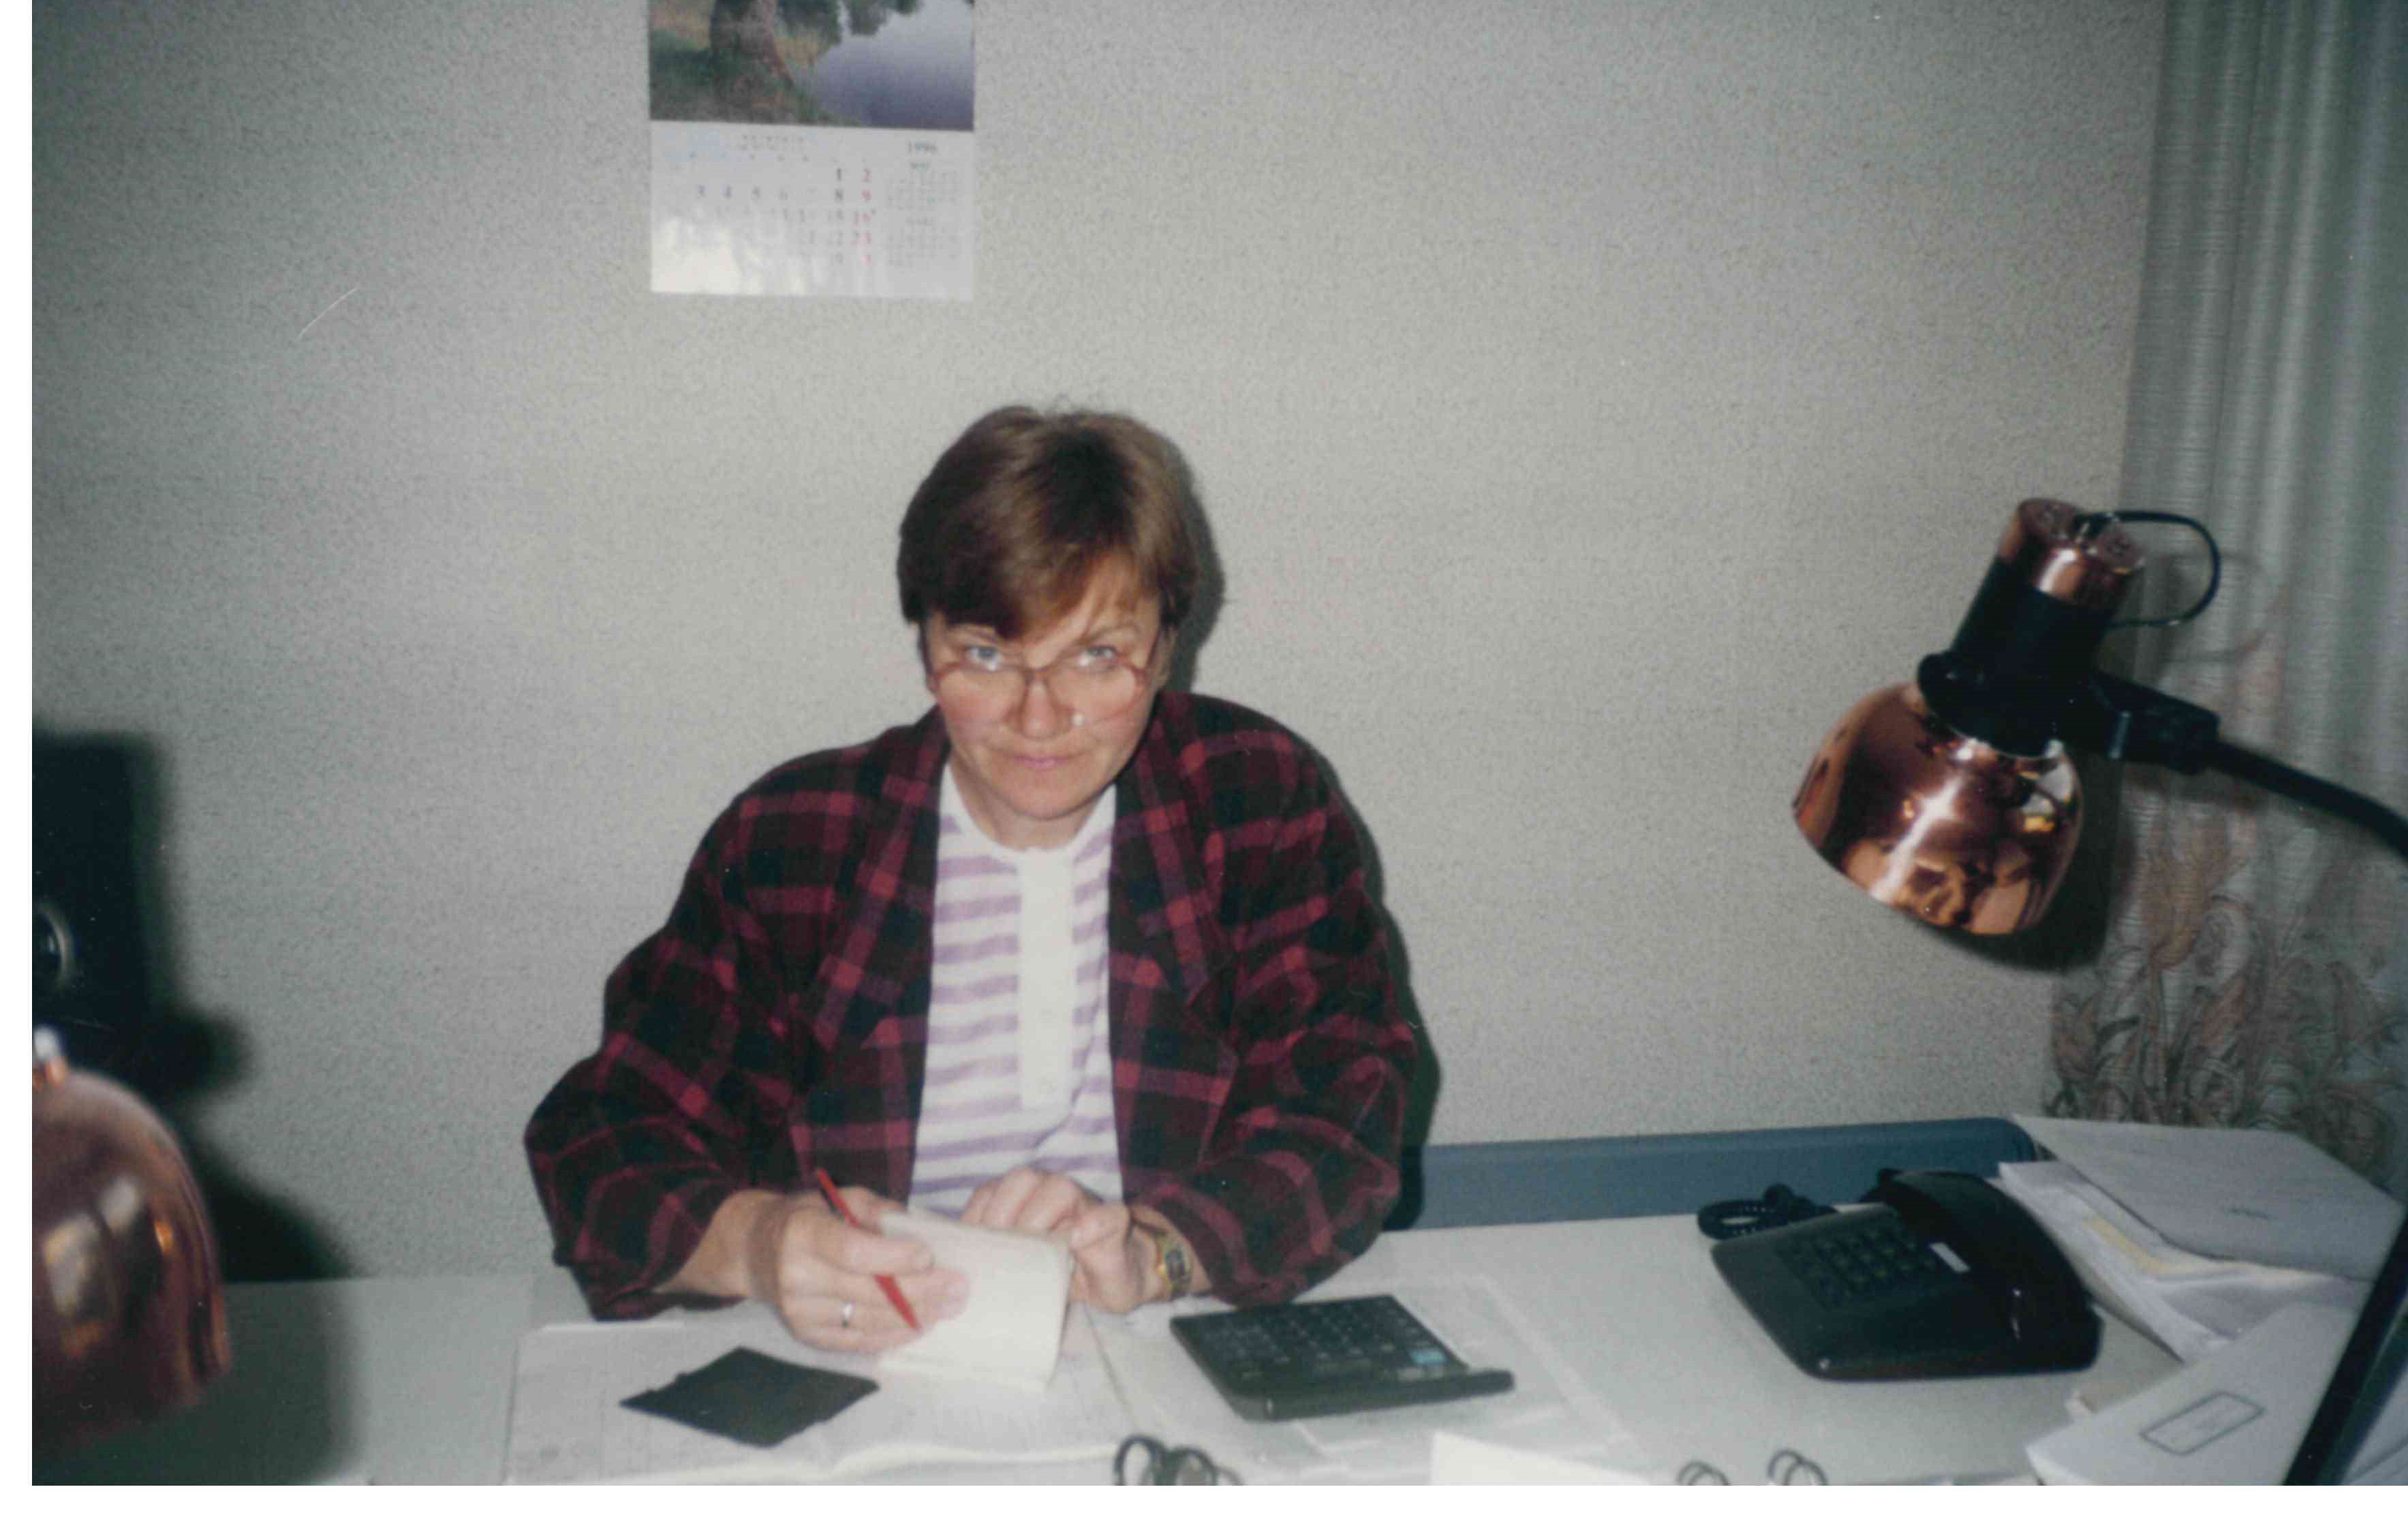 Employees of Taebla rural municipality 1993-1996. Accounting Manager Ilme Kolga